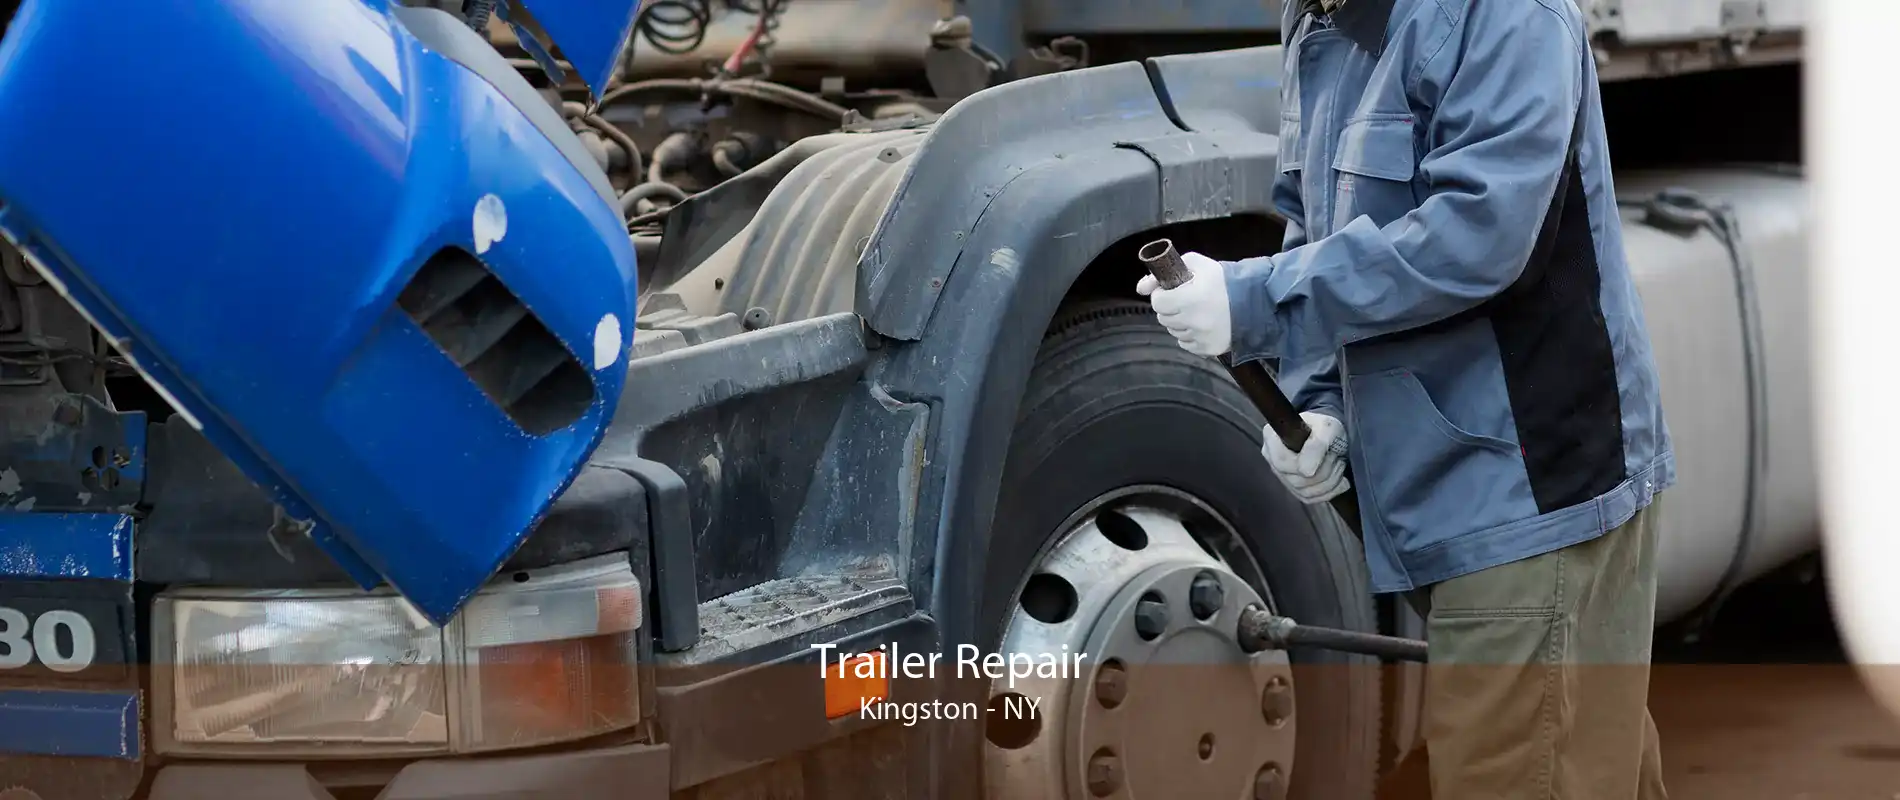 Trailer Repair Kingston - NY